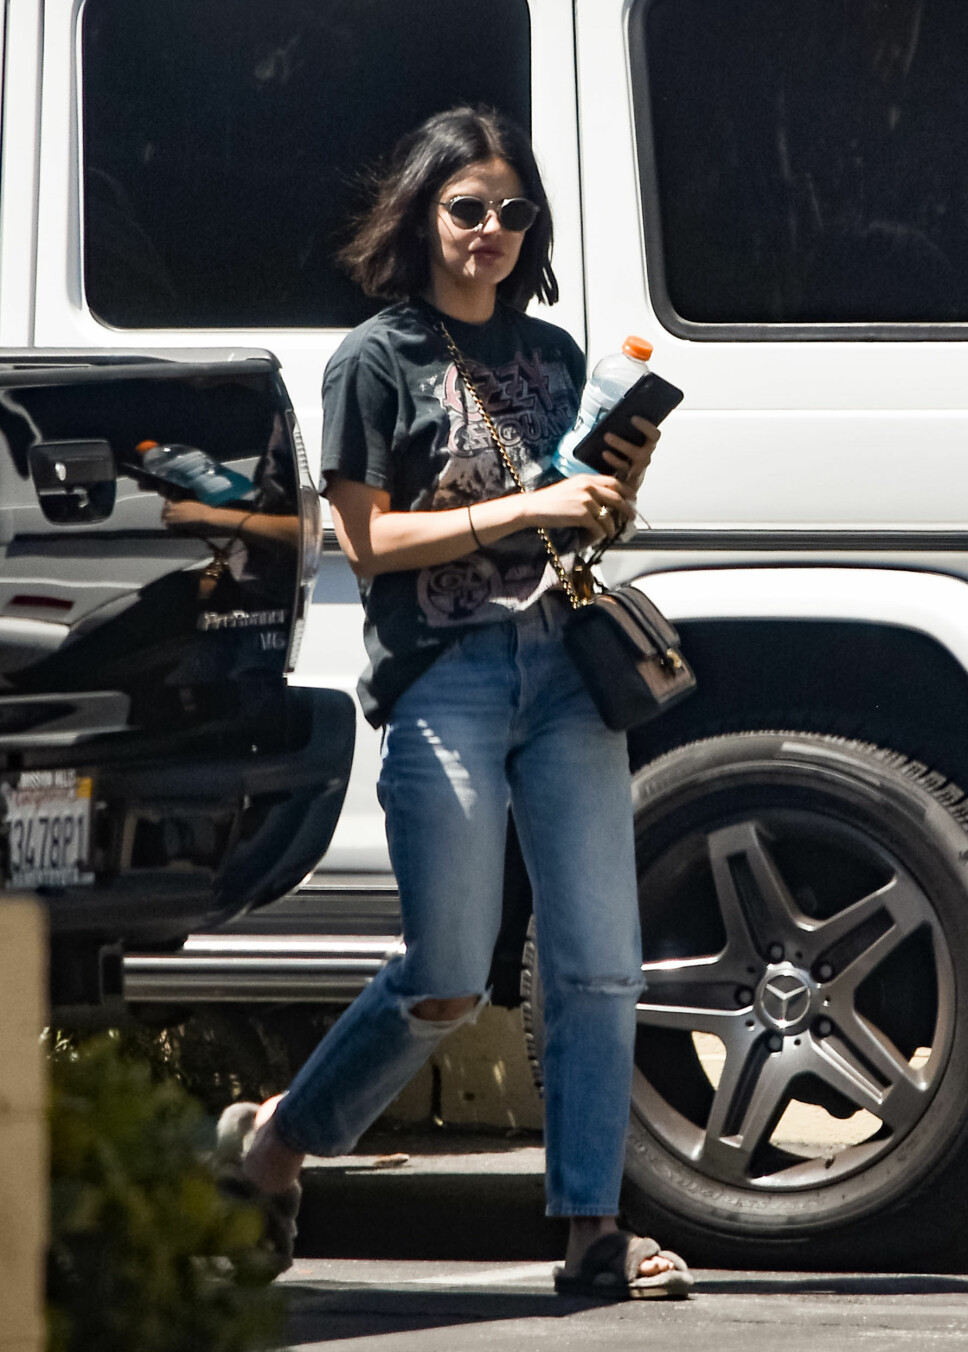 ANNO 2019: Skuespiller og «Pretty Little Liars»-stjerne Lucy Hale med Ozzy Osbourne t-skjorte på vandring i Los Angeles i august 2019.